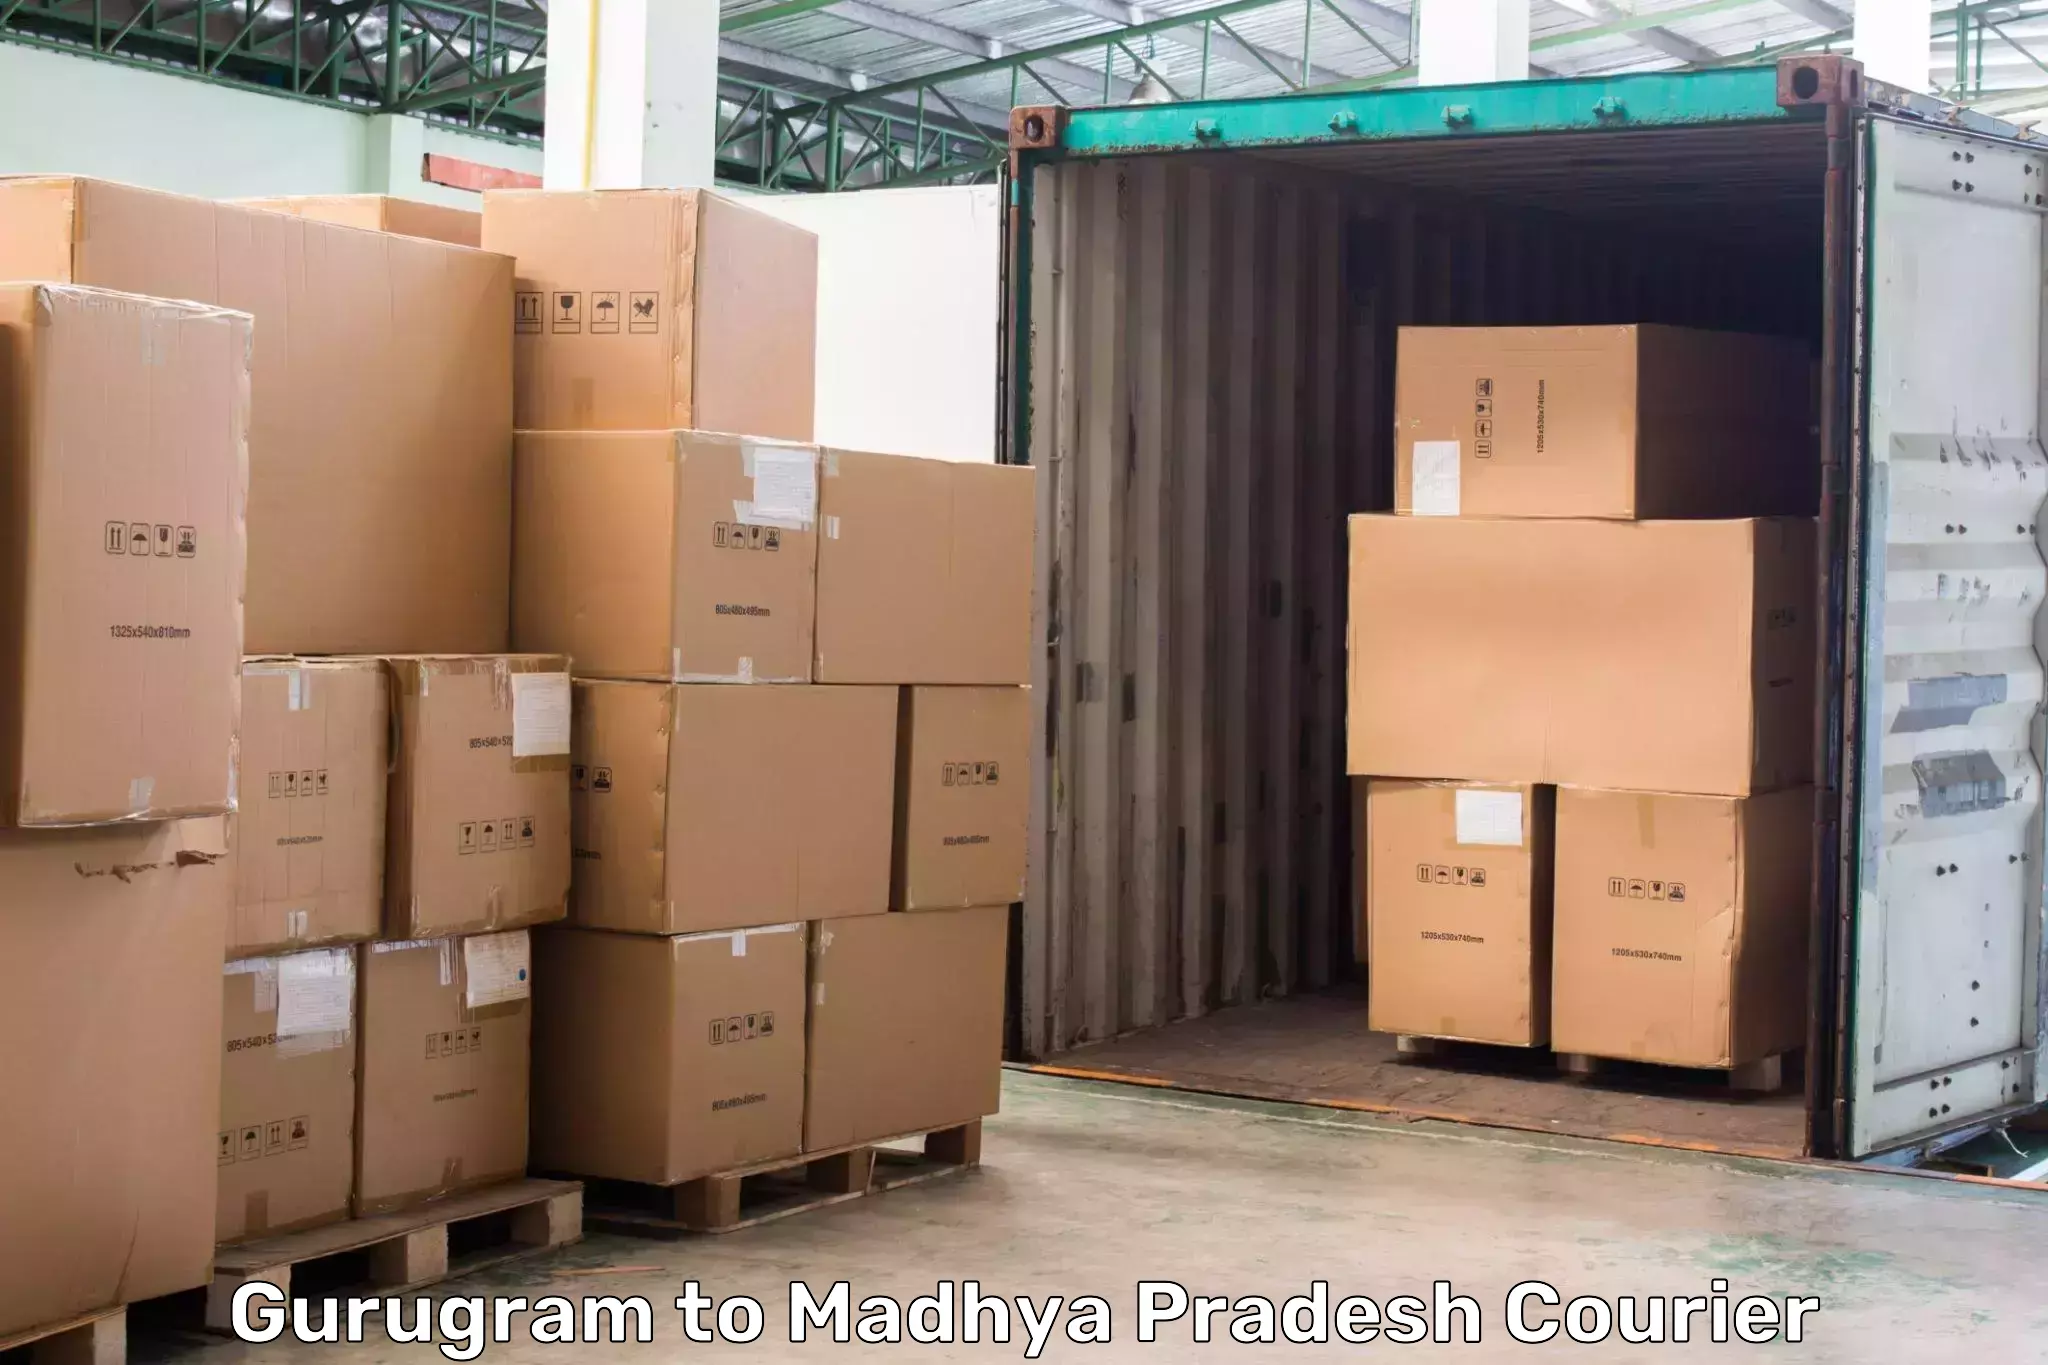 Package delivery network Gurugram to Nagod